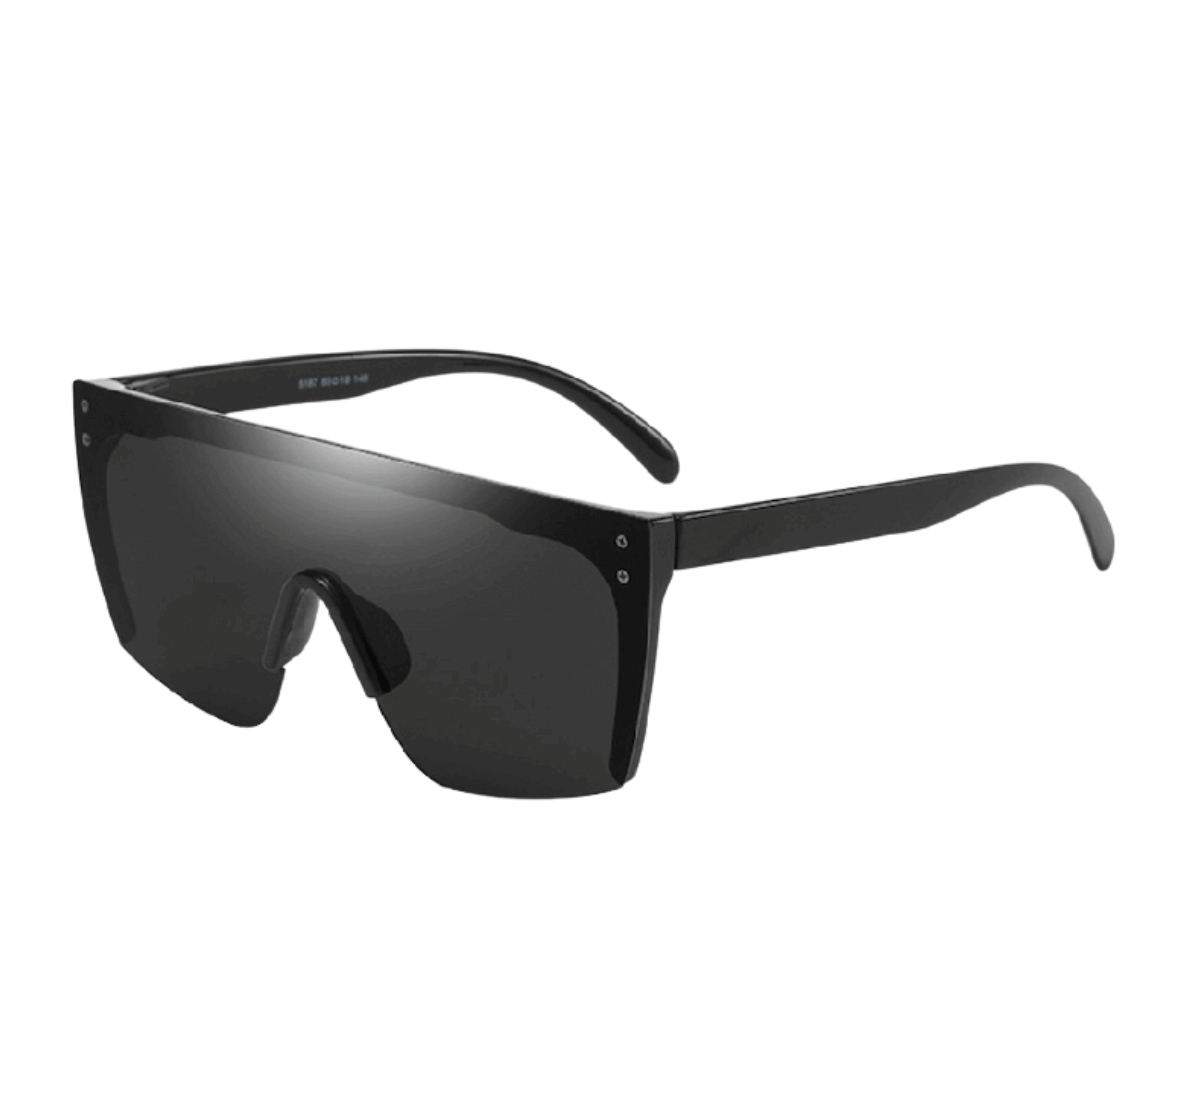 wholesale plastic sunglasses, wholesale oversized sunglasses, plastic sunglasses in bulk, plastic sunglasses manufacturers, China sunglasses supplier